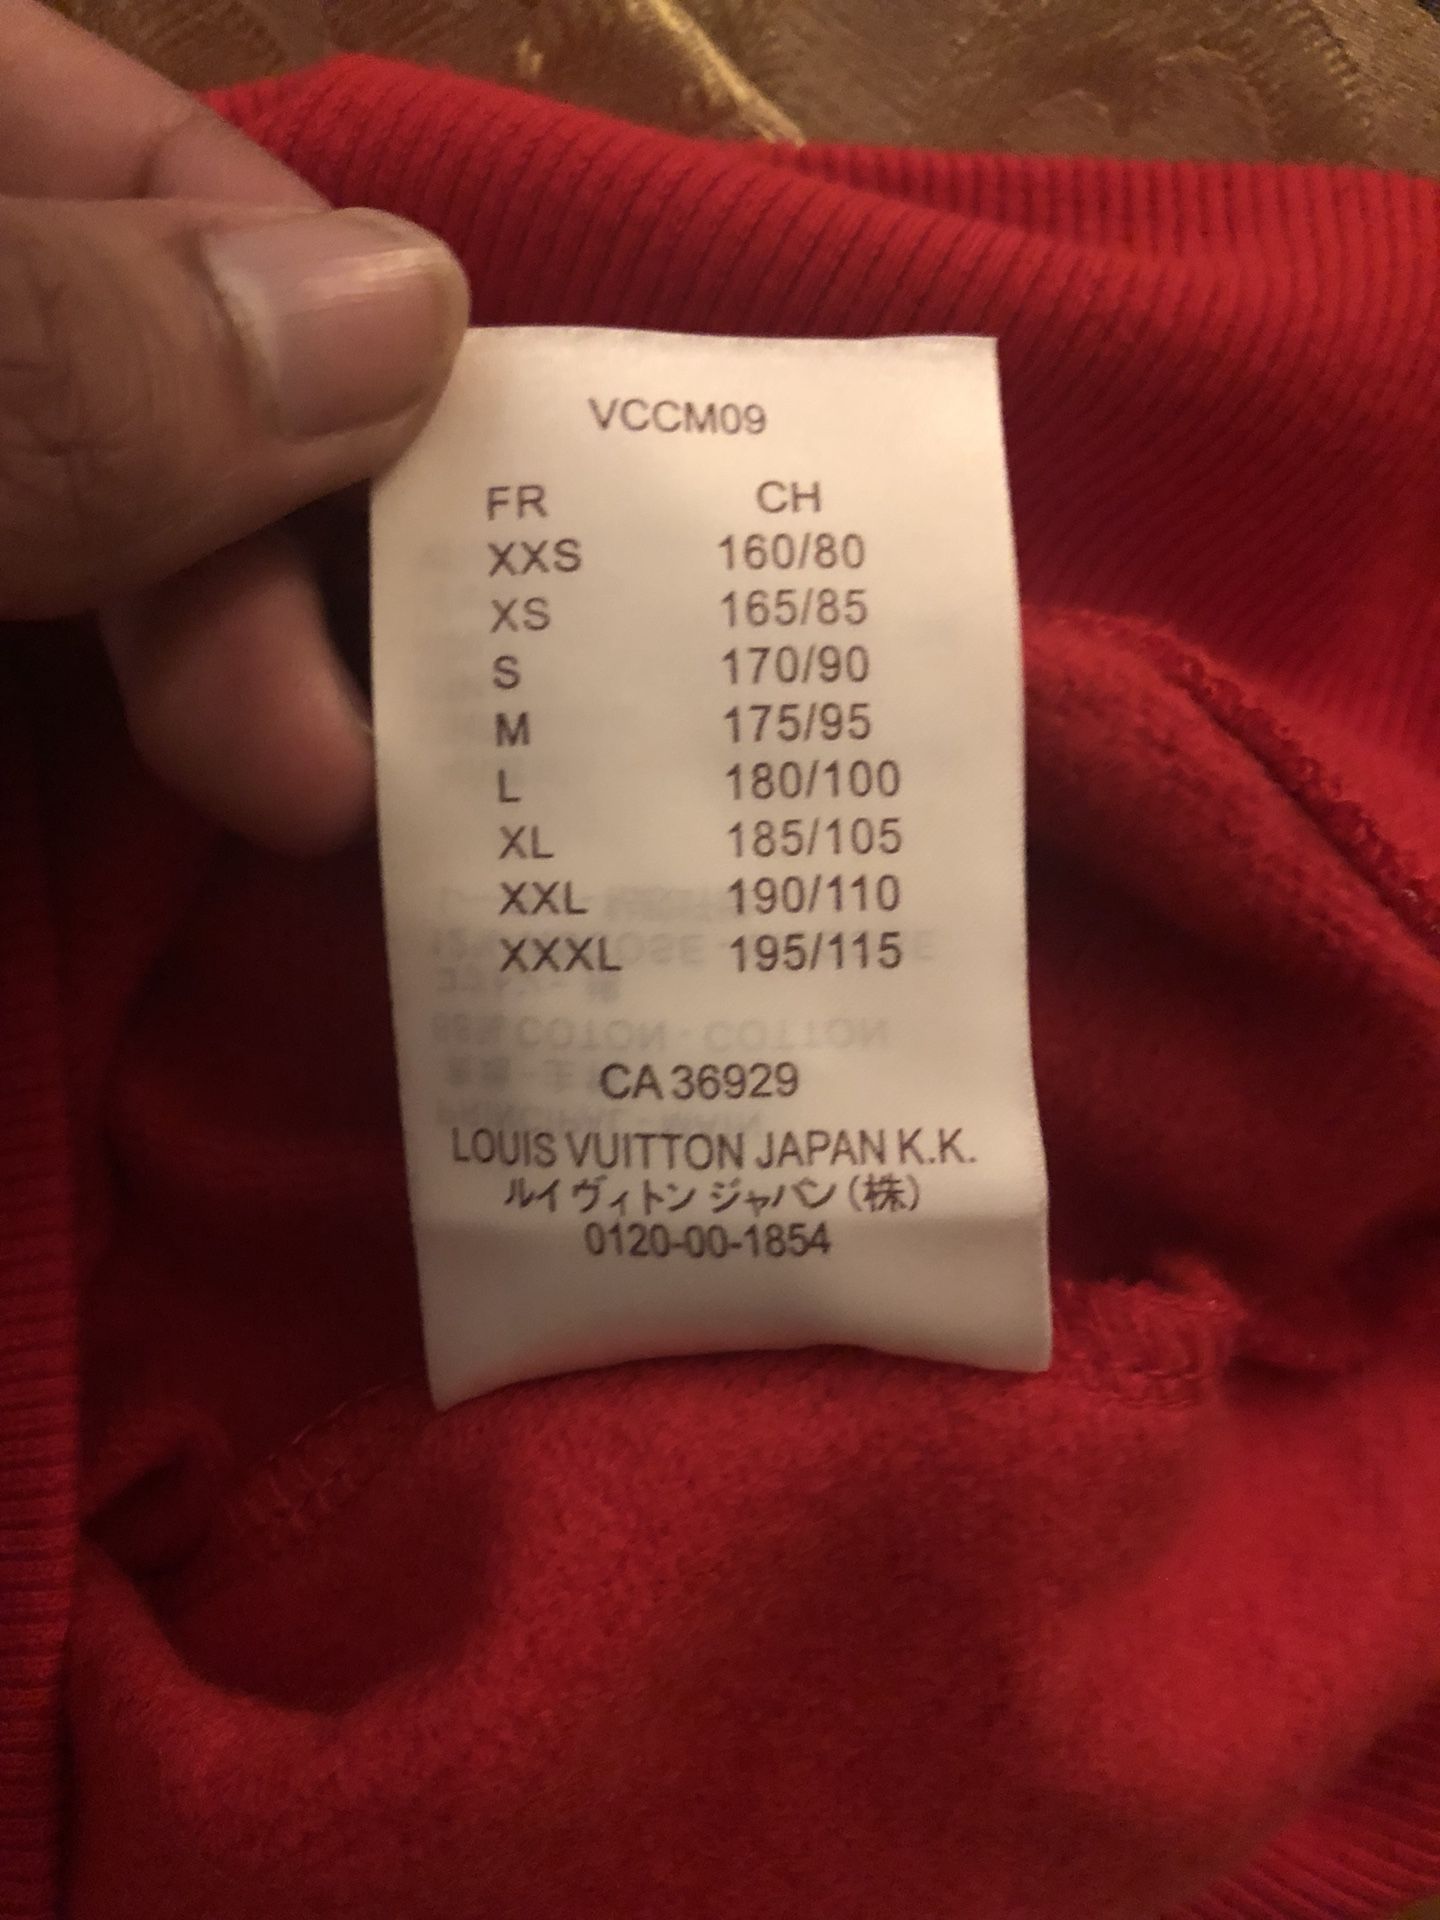 Louis Vuitton Supreme kids shirt for Sale in Phoenix, AZ - OfferUp